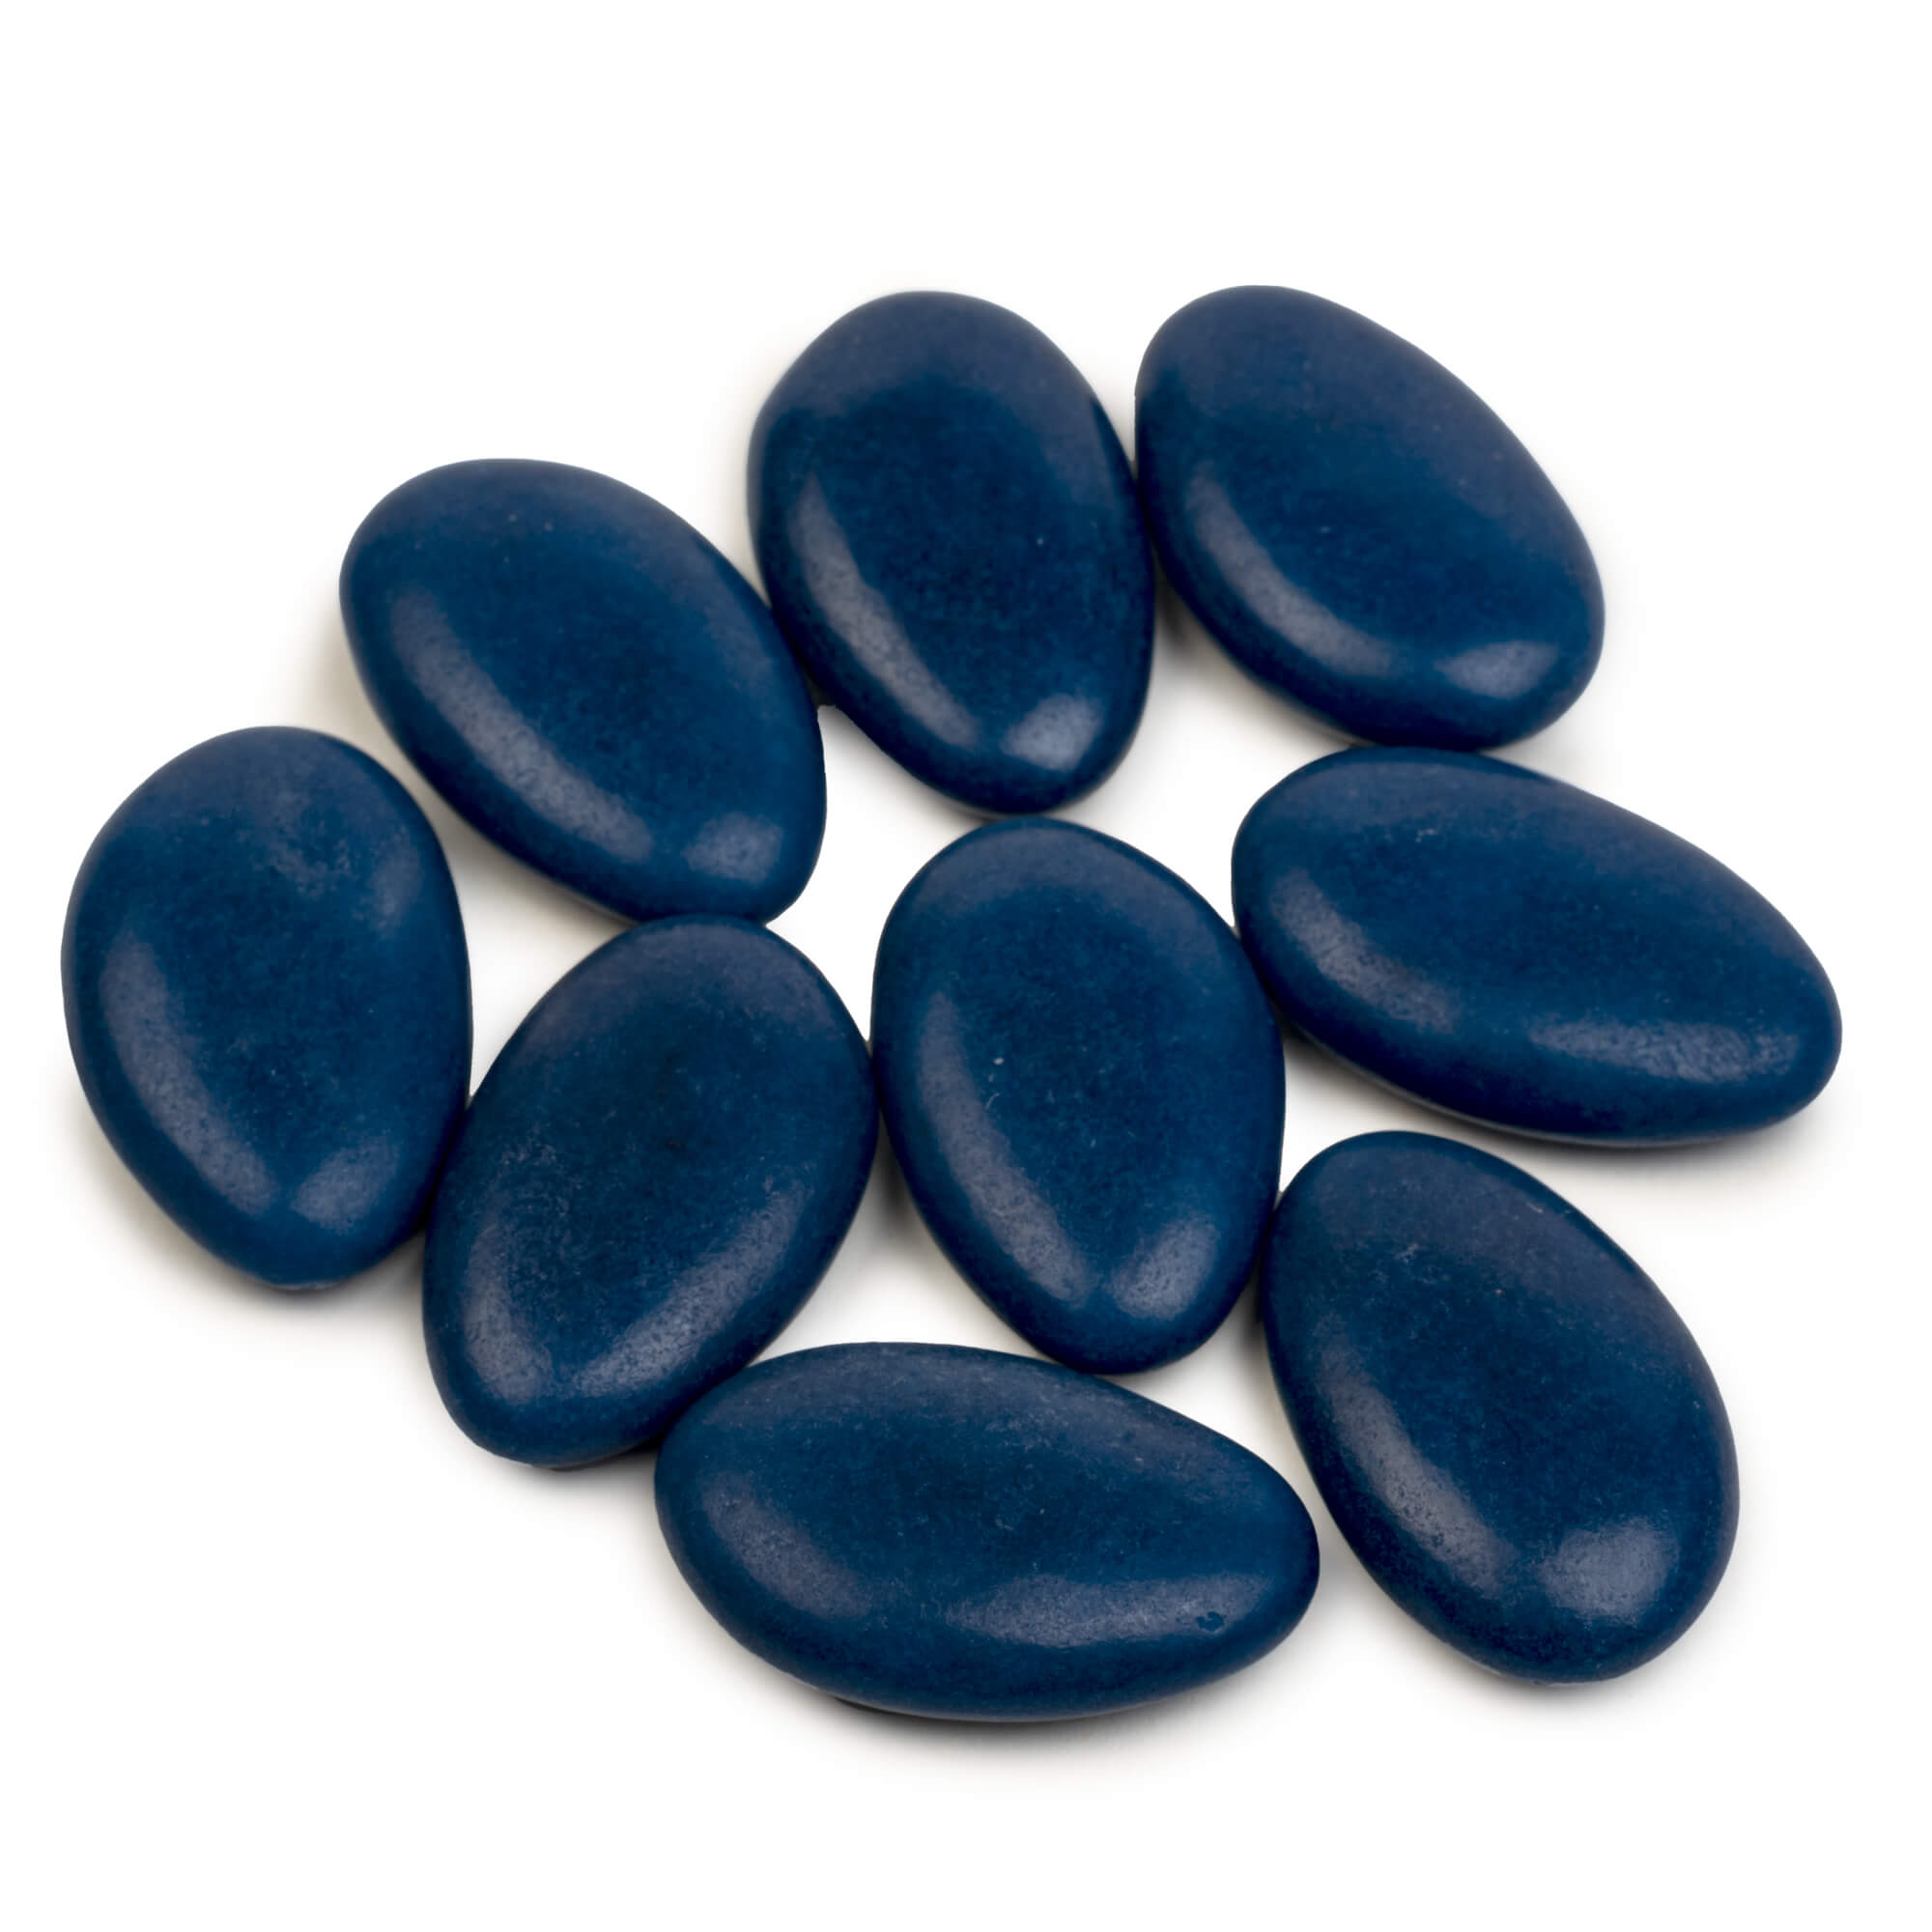 Dragées 70% cacao - bleu marine brillant - boîte de 1 kg.